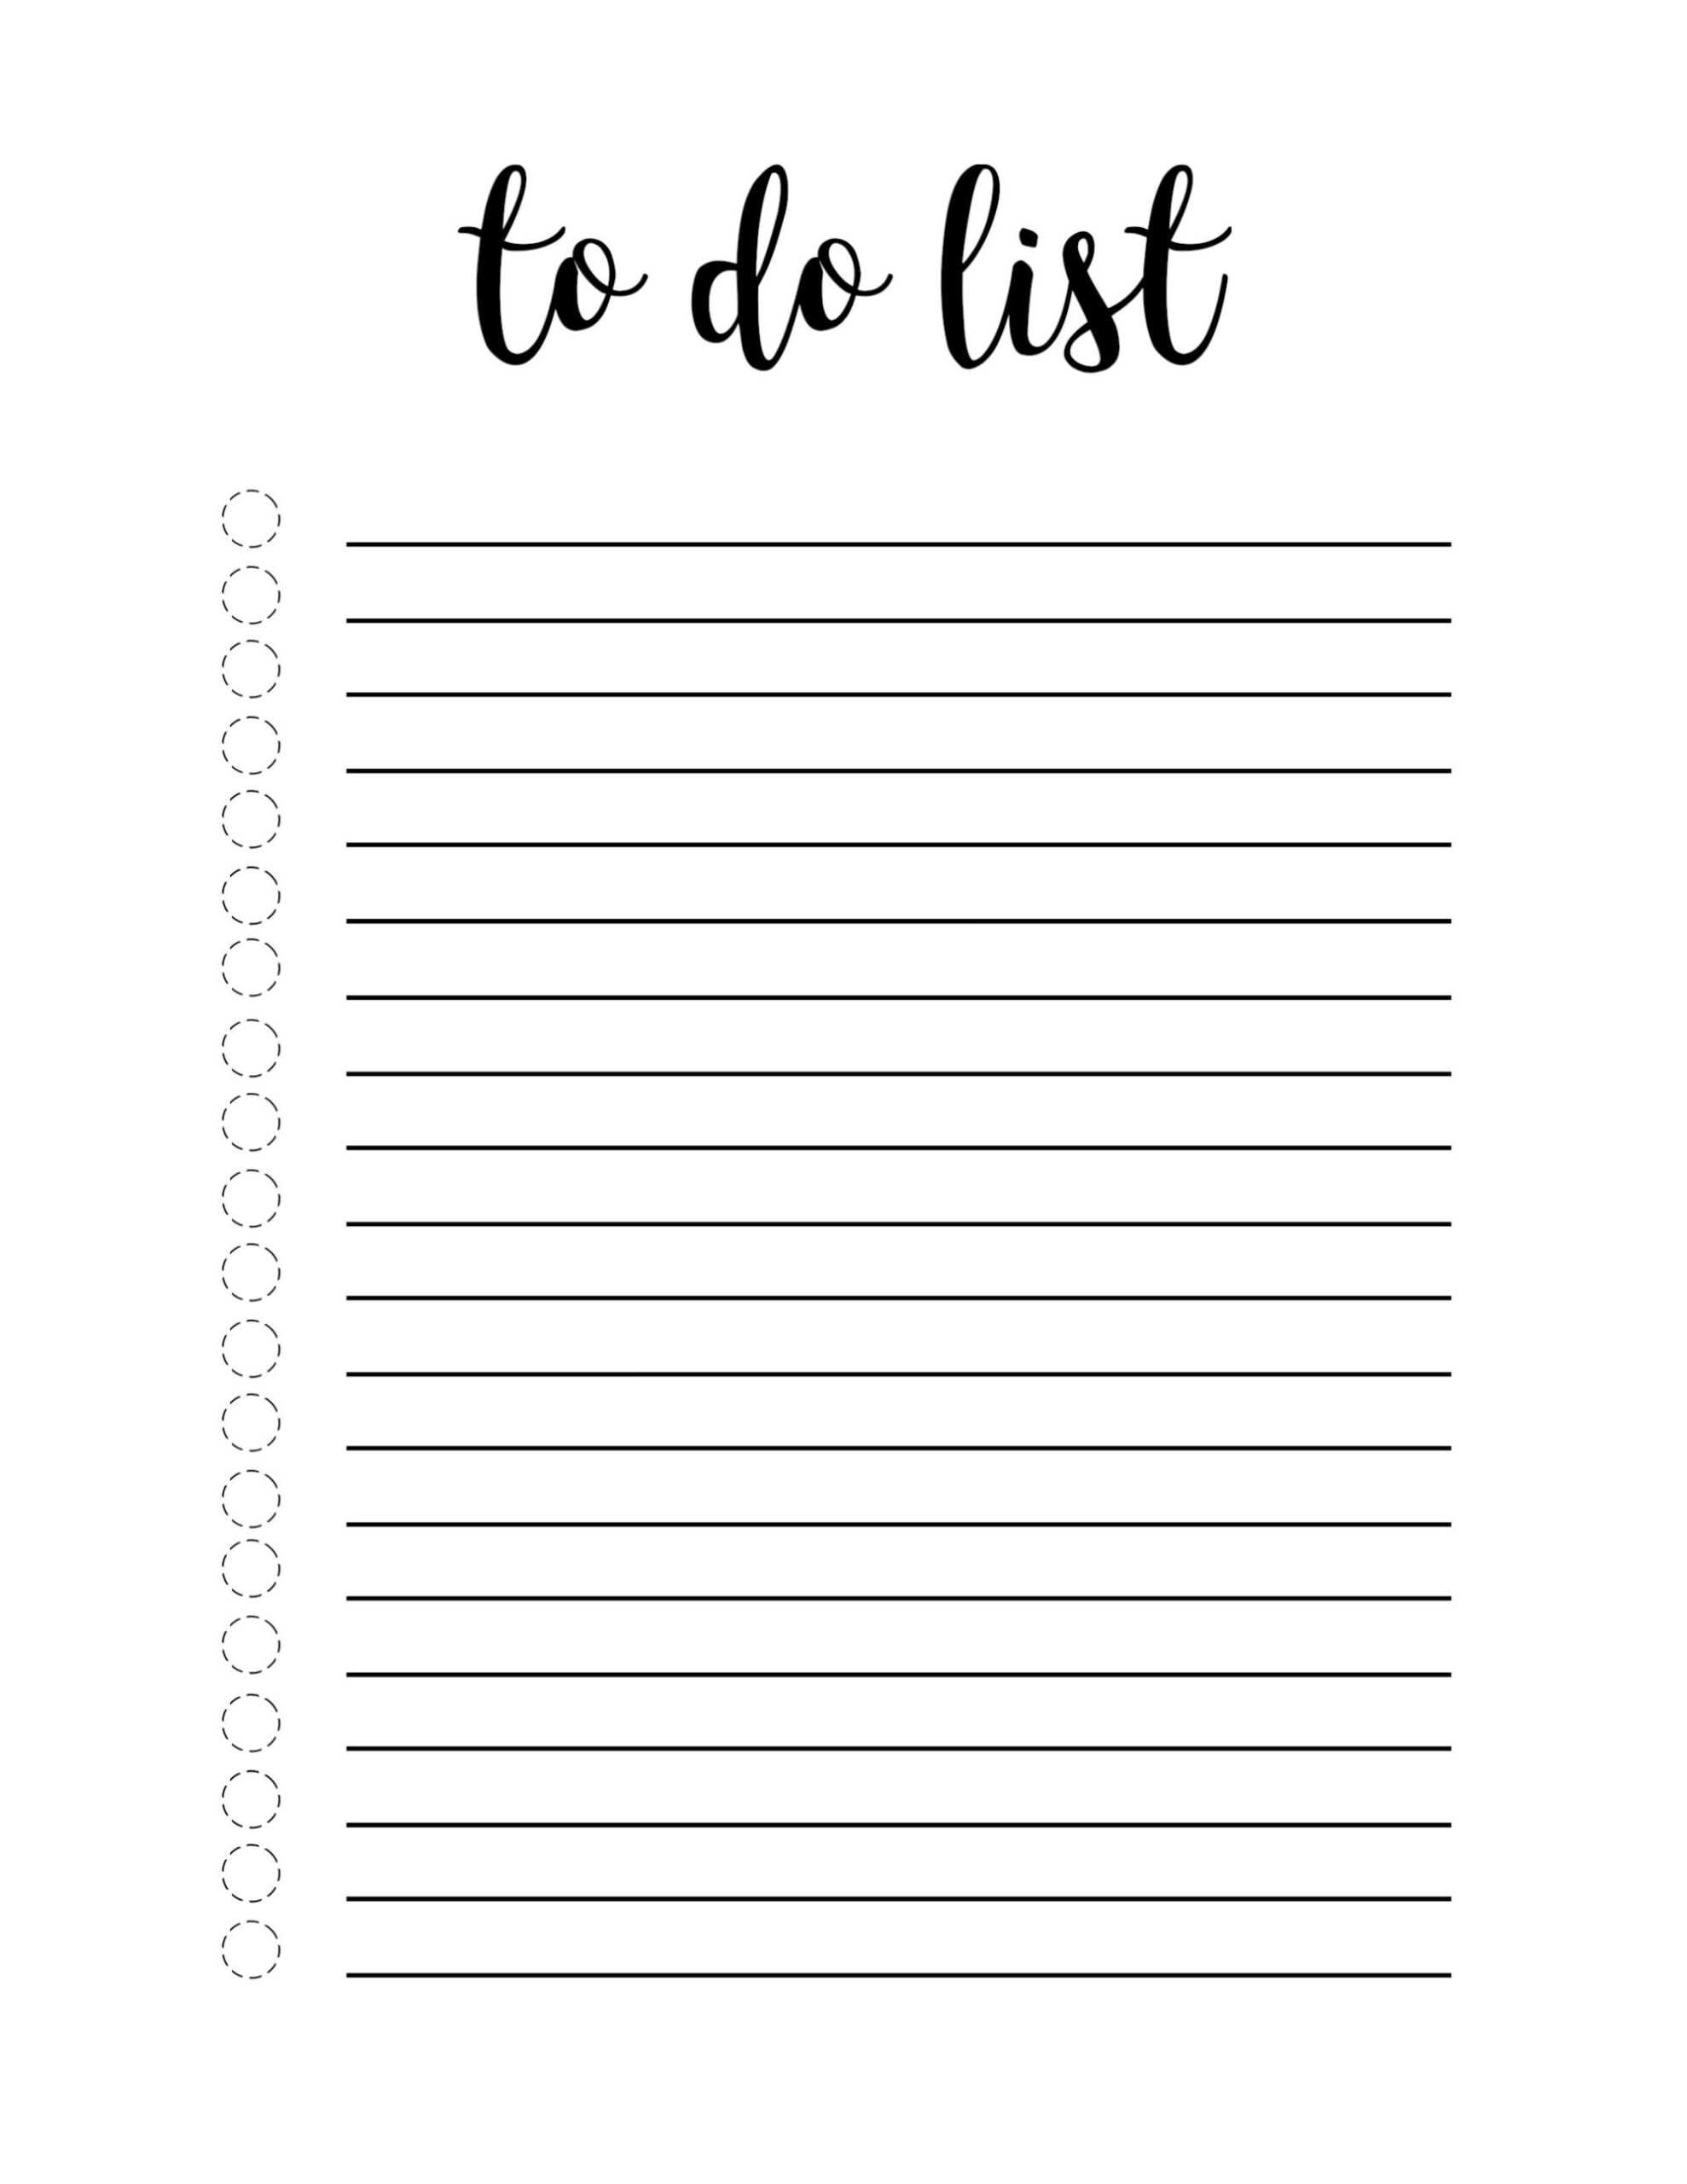 Free Printable To Do List Template | To Do Lists Printable Within Blank To Do List Template